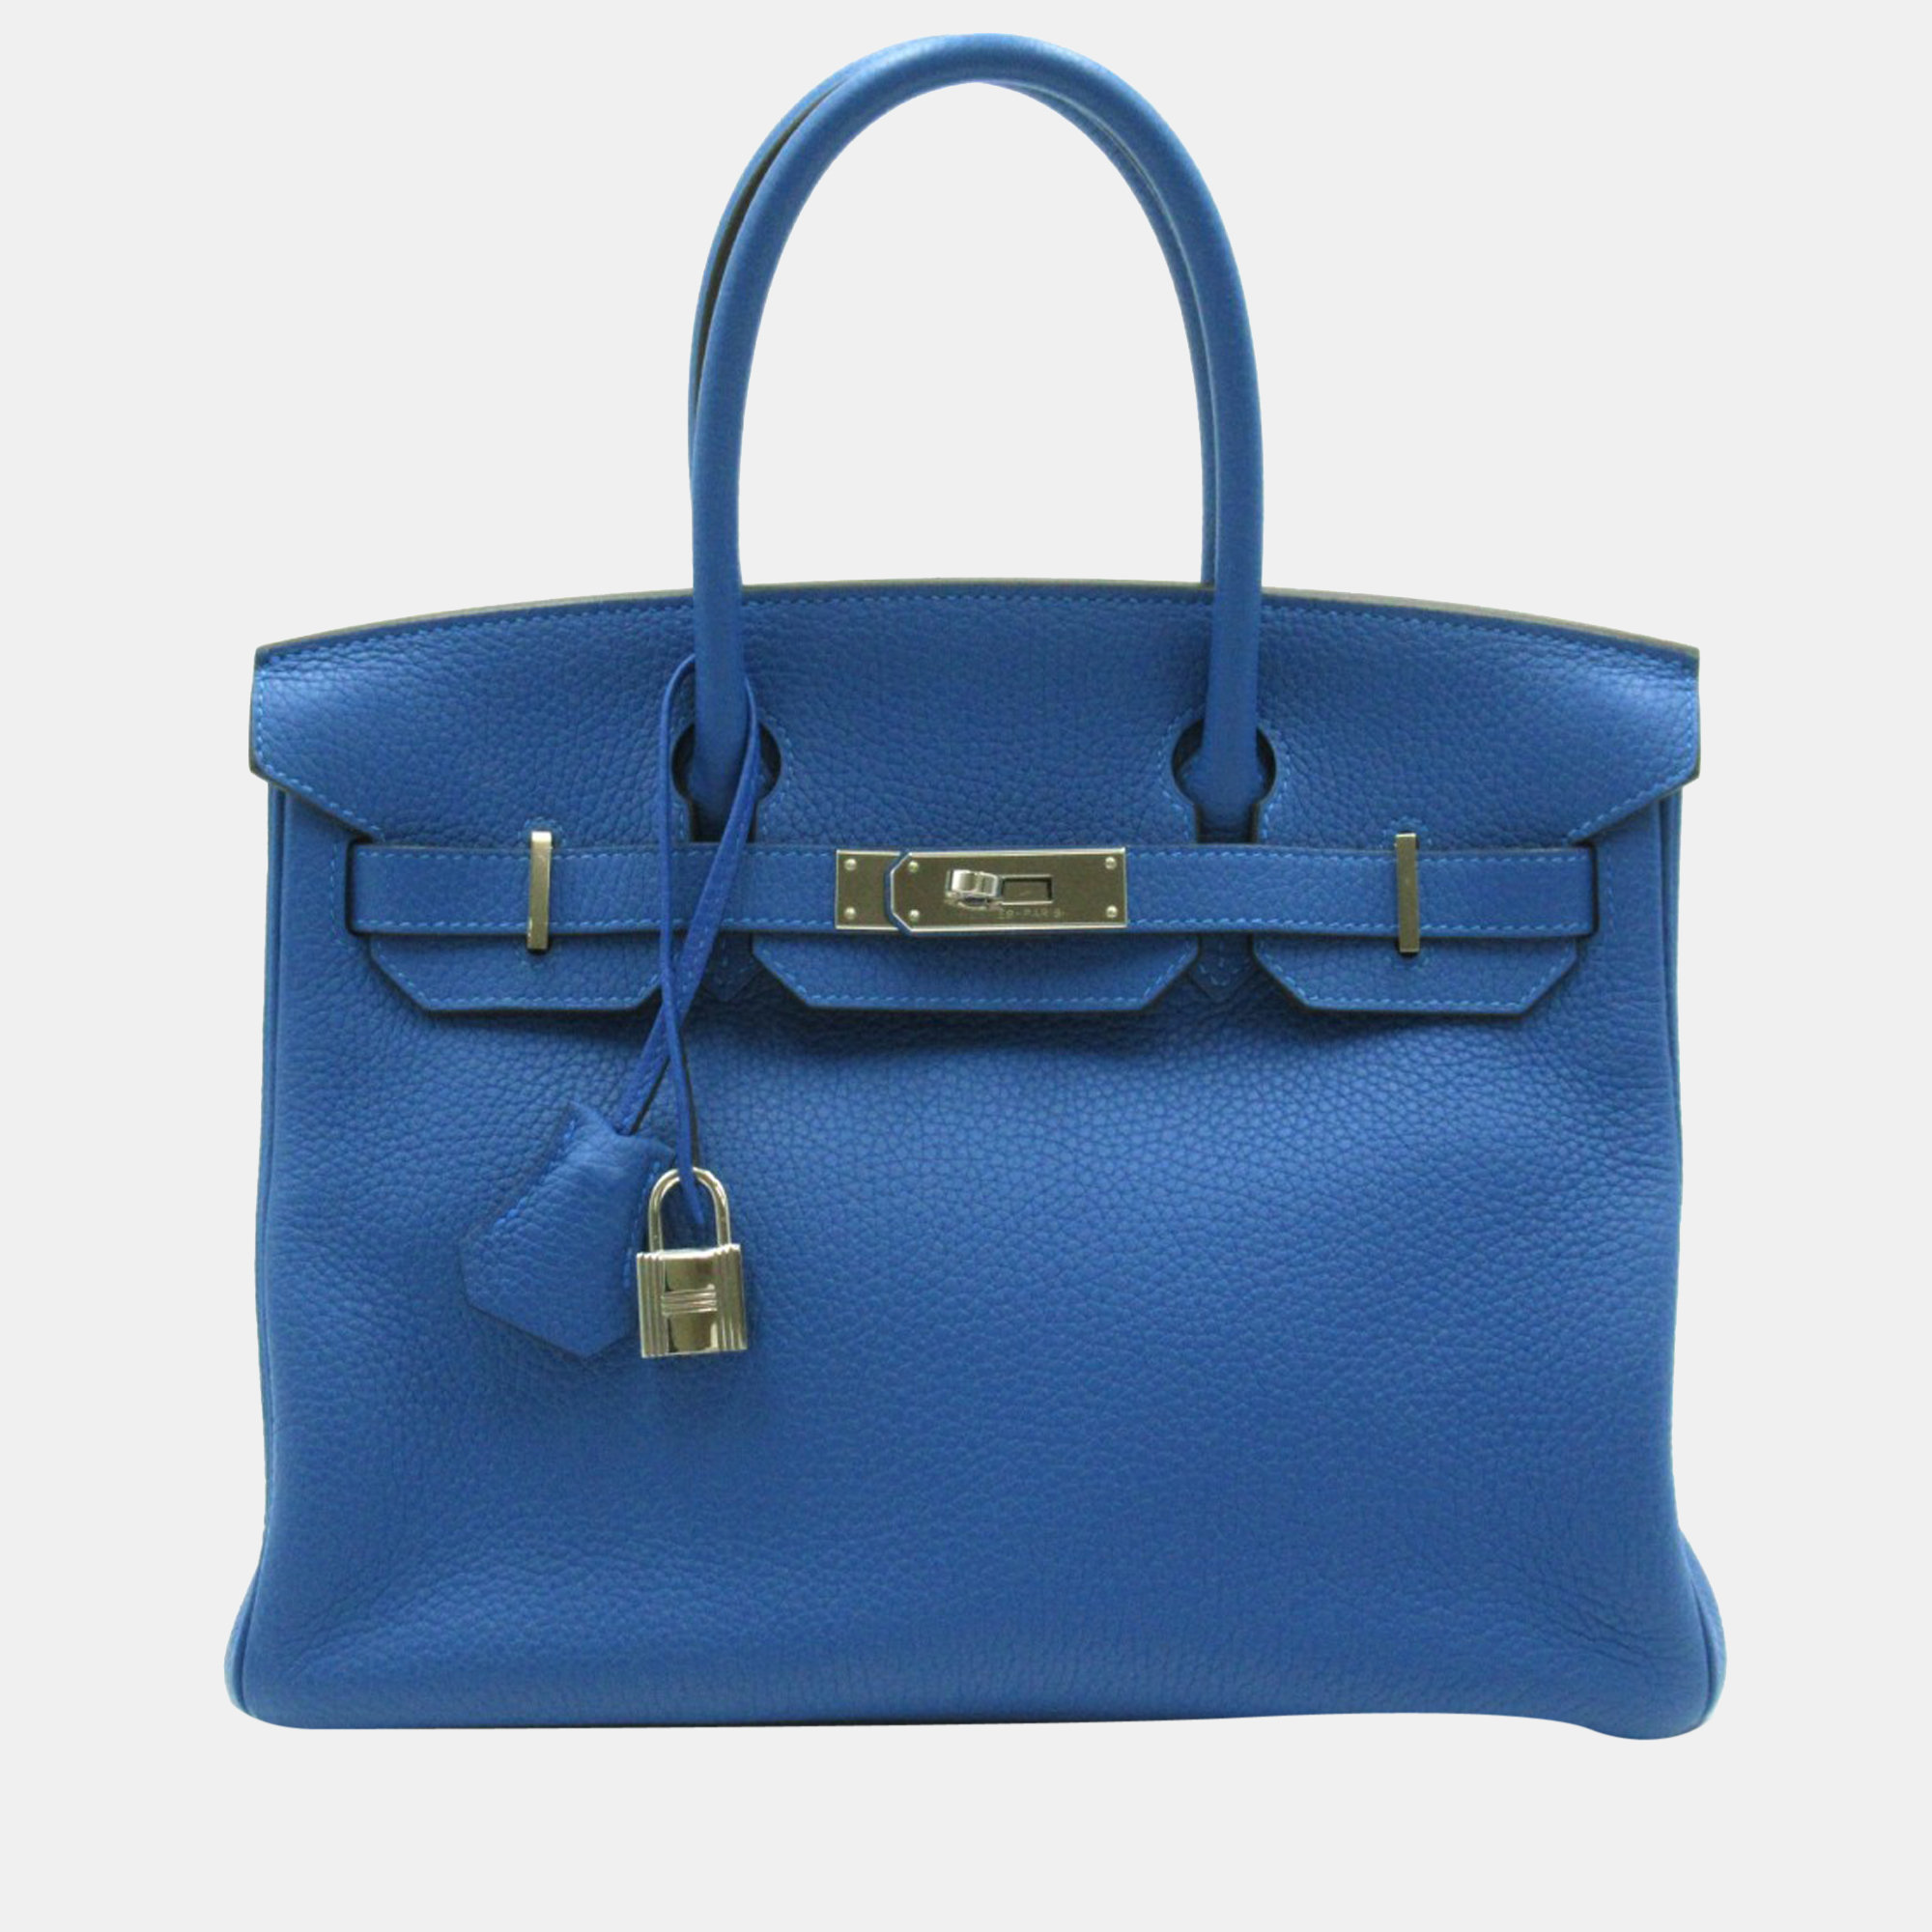 Hermes Blue Togo Leather Palladium Hardware Birkin 30 Bag